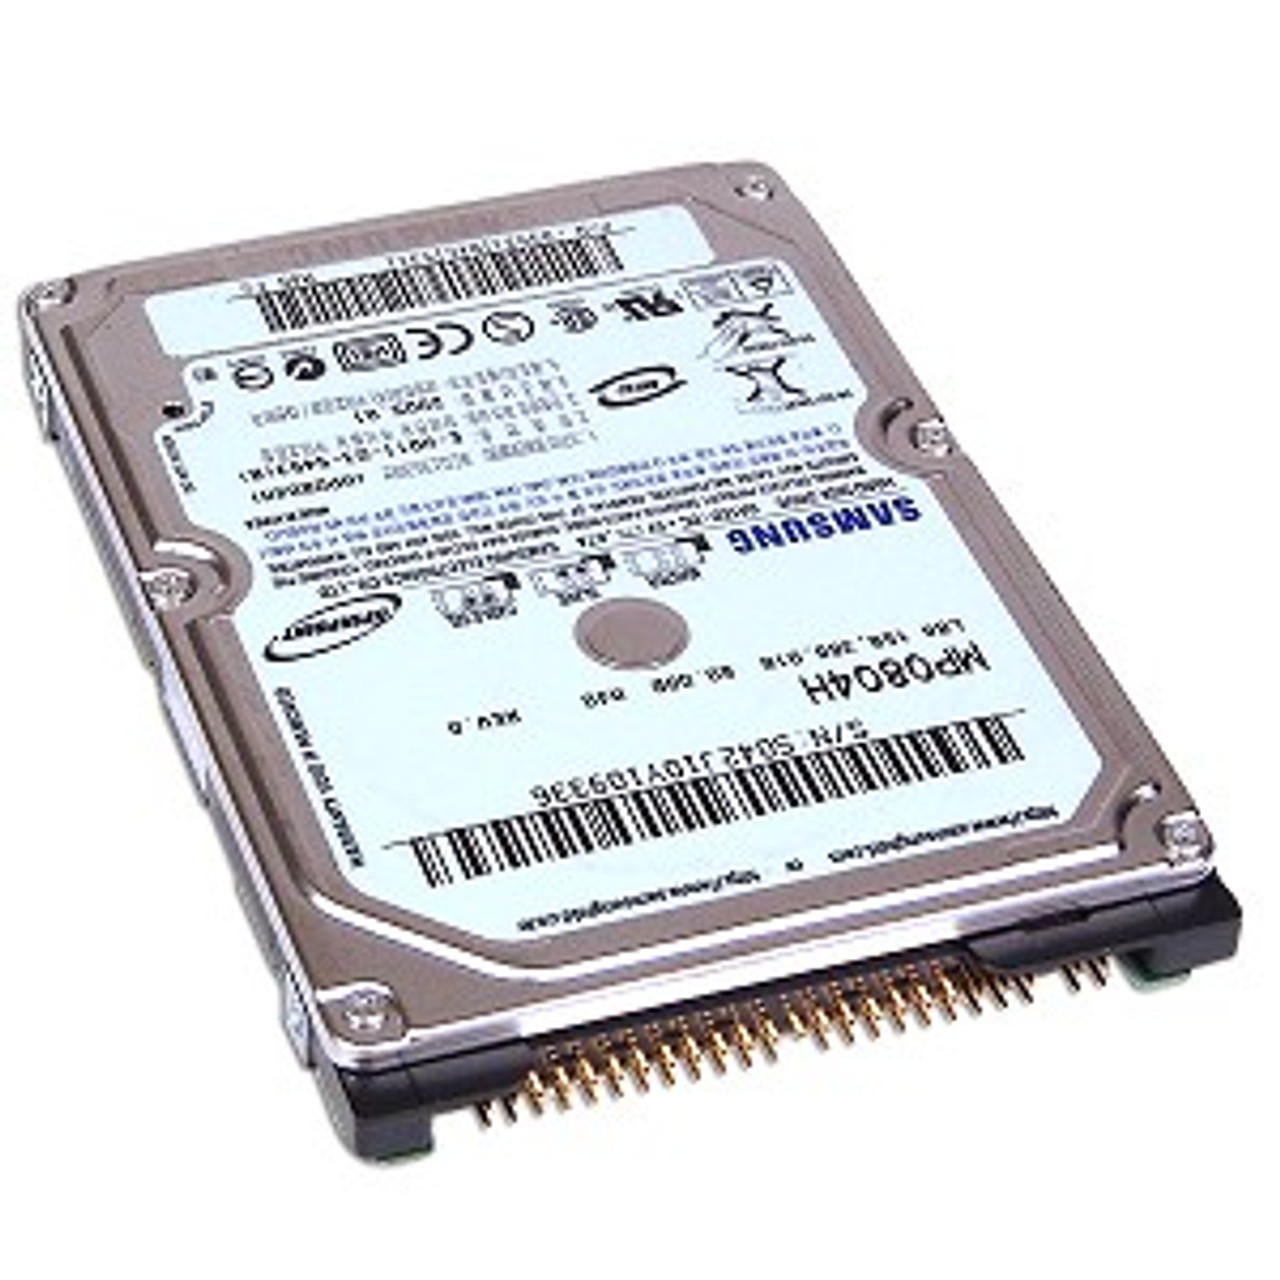 MP0804H - Samsung Spinpoint 80 GB 2.5 Internal Hard Drive - IDE Ultra ATA/100 (ATA-6) - 5400 rpm - 8 MB Buffer